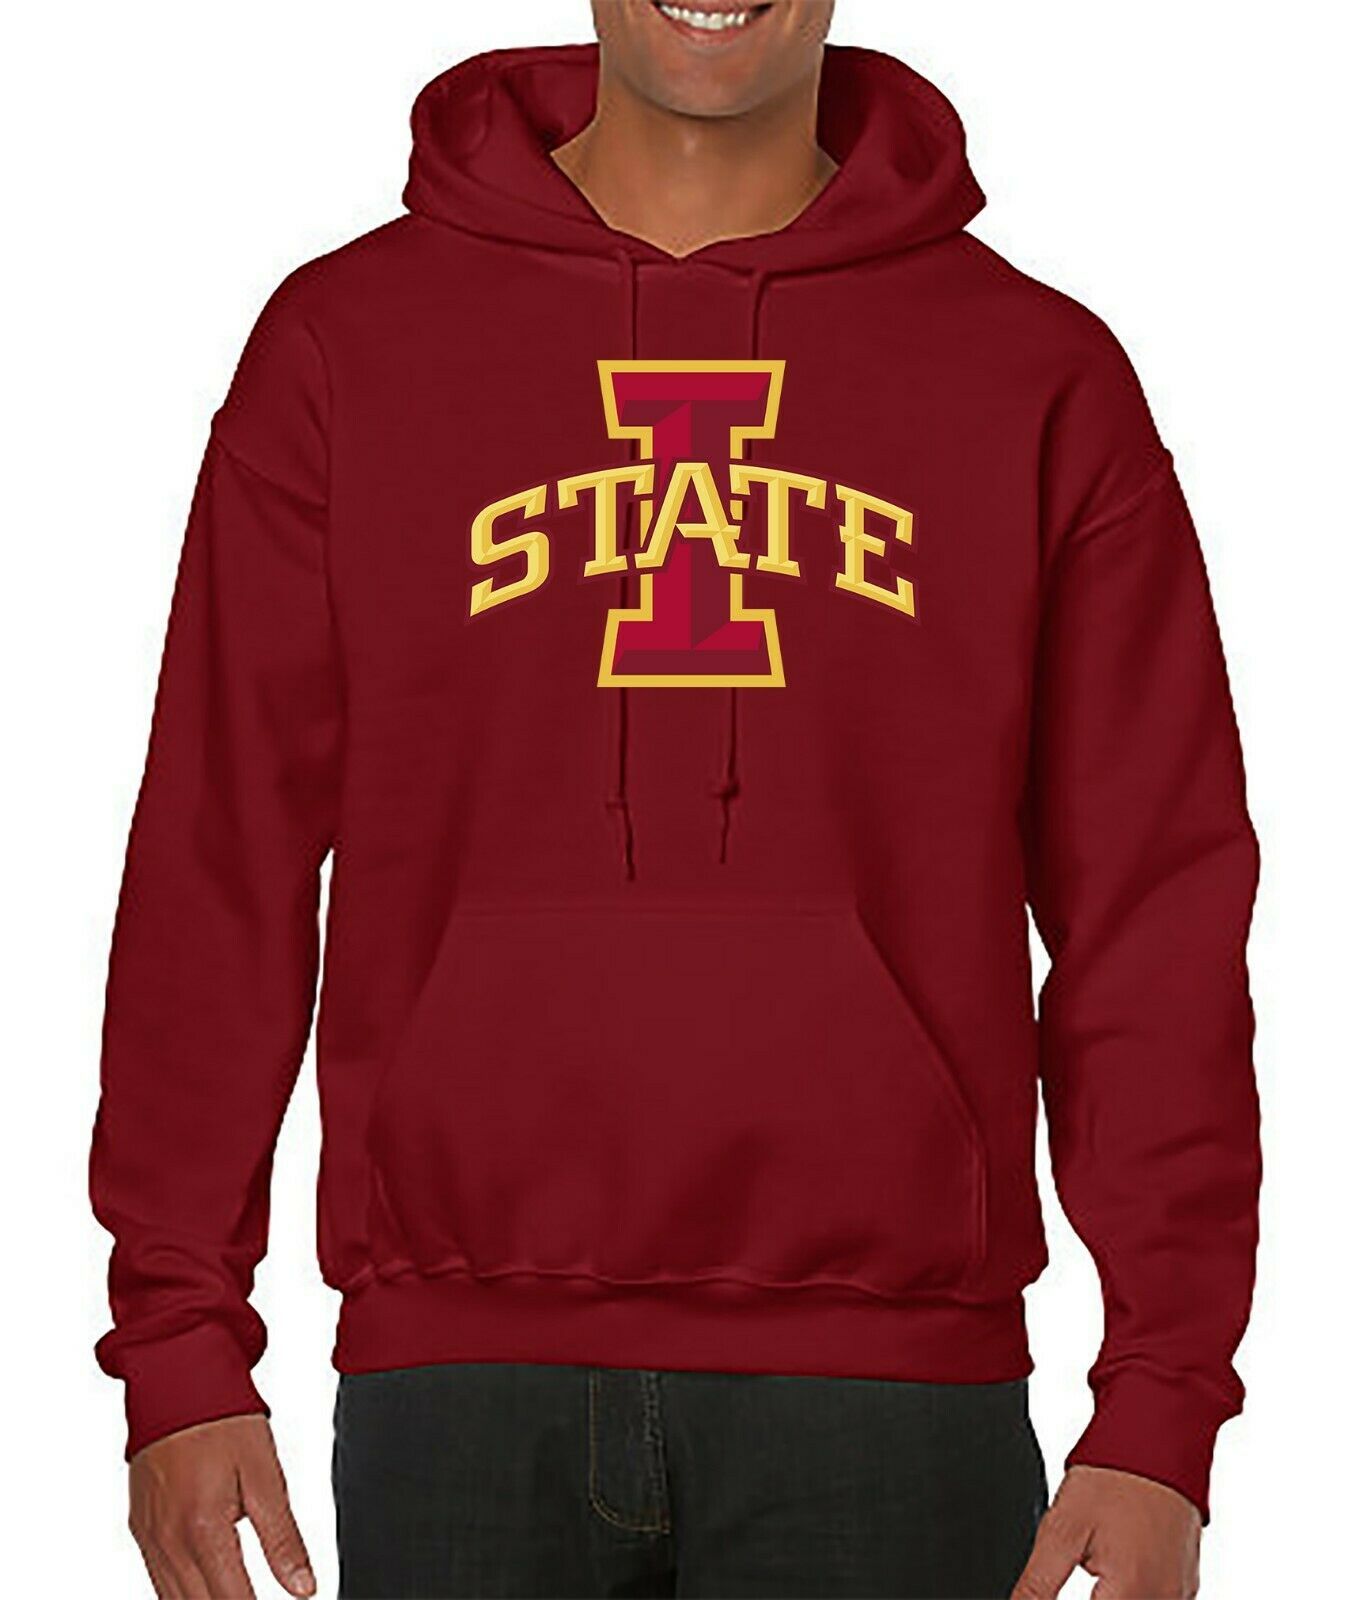 NCAA Basketball team hoodie - sweater with Iowa State logo - comfort ...